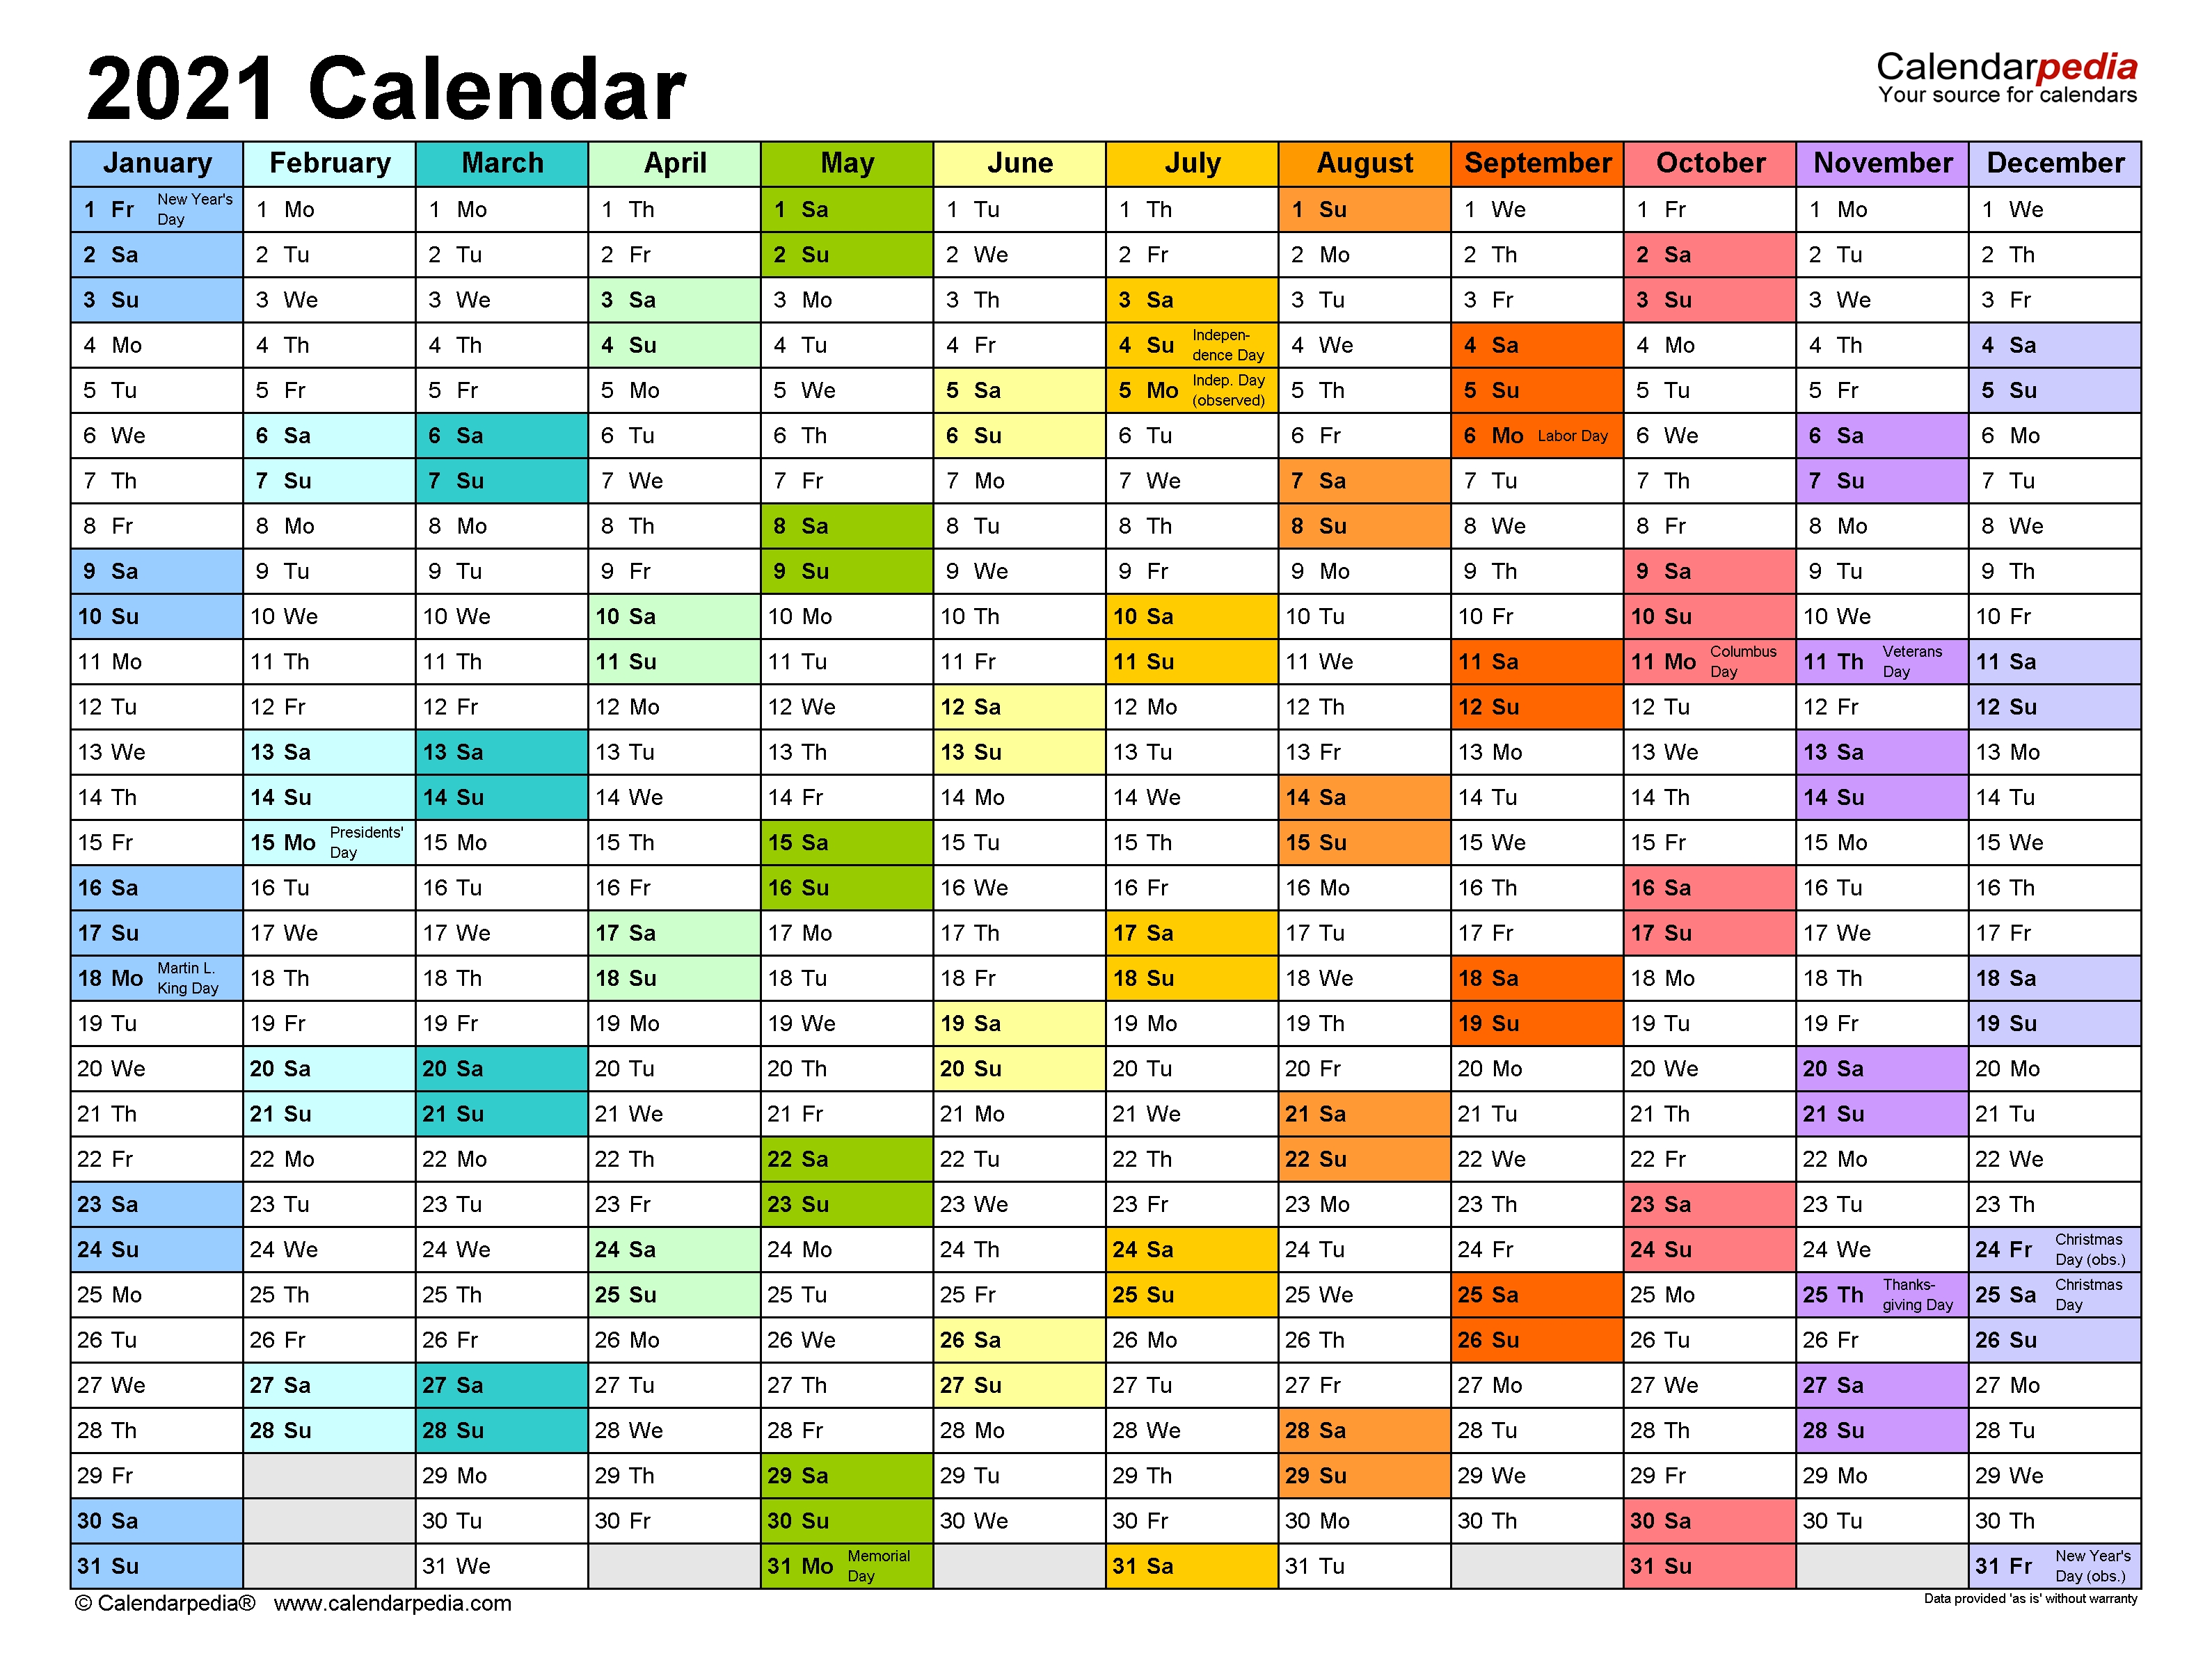 2021 Calendar - Free Printable Word Templates - Calendarpedia Calendarpedia 2021